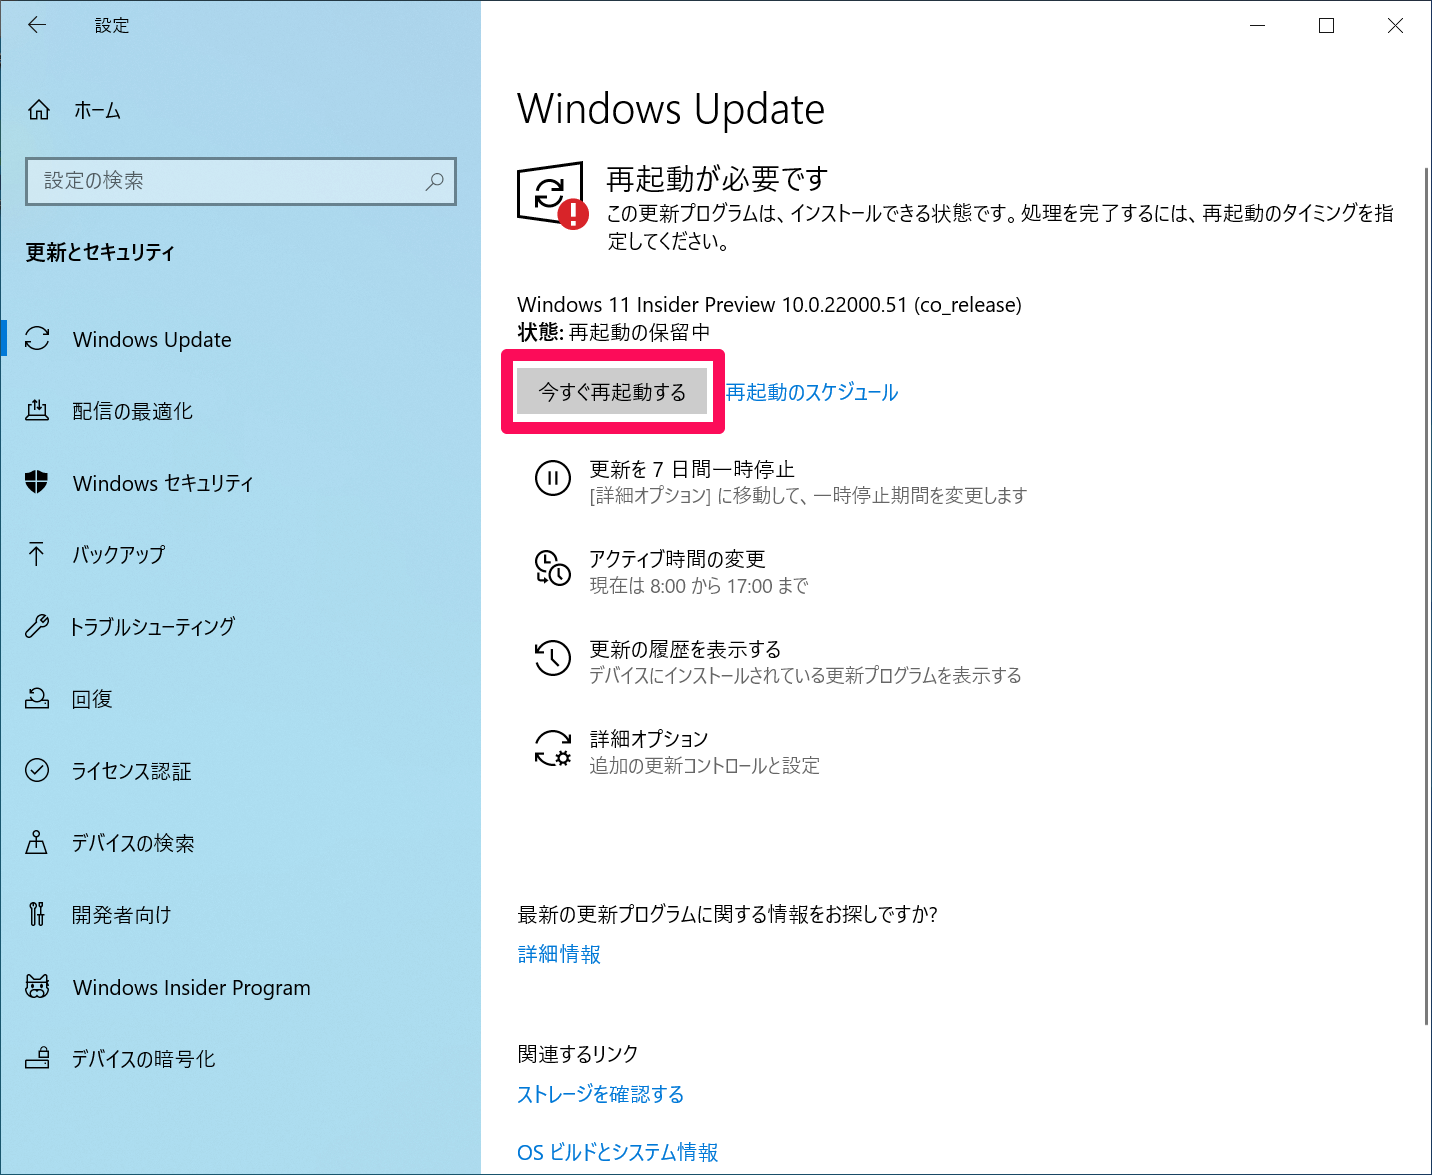 Windows 11のプレビュー版をインストールする方法。Devチャネル登録済みのWindows 10からアップグレード